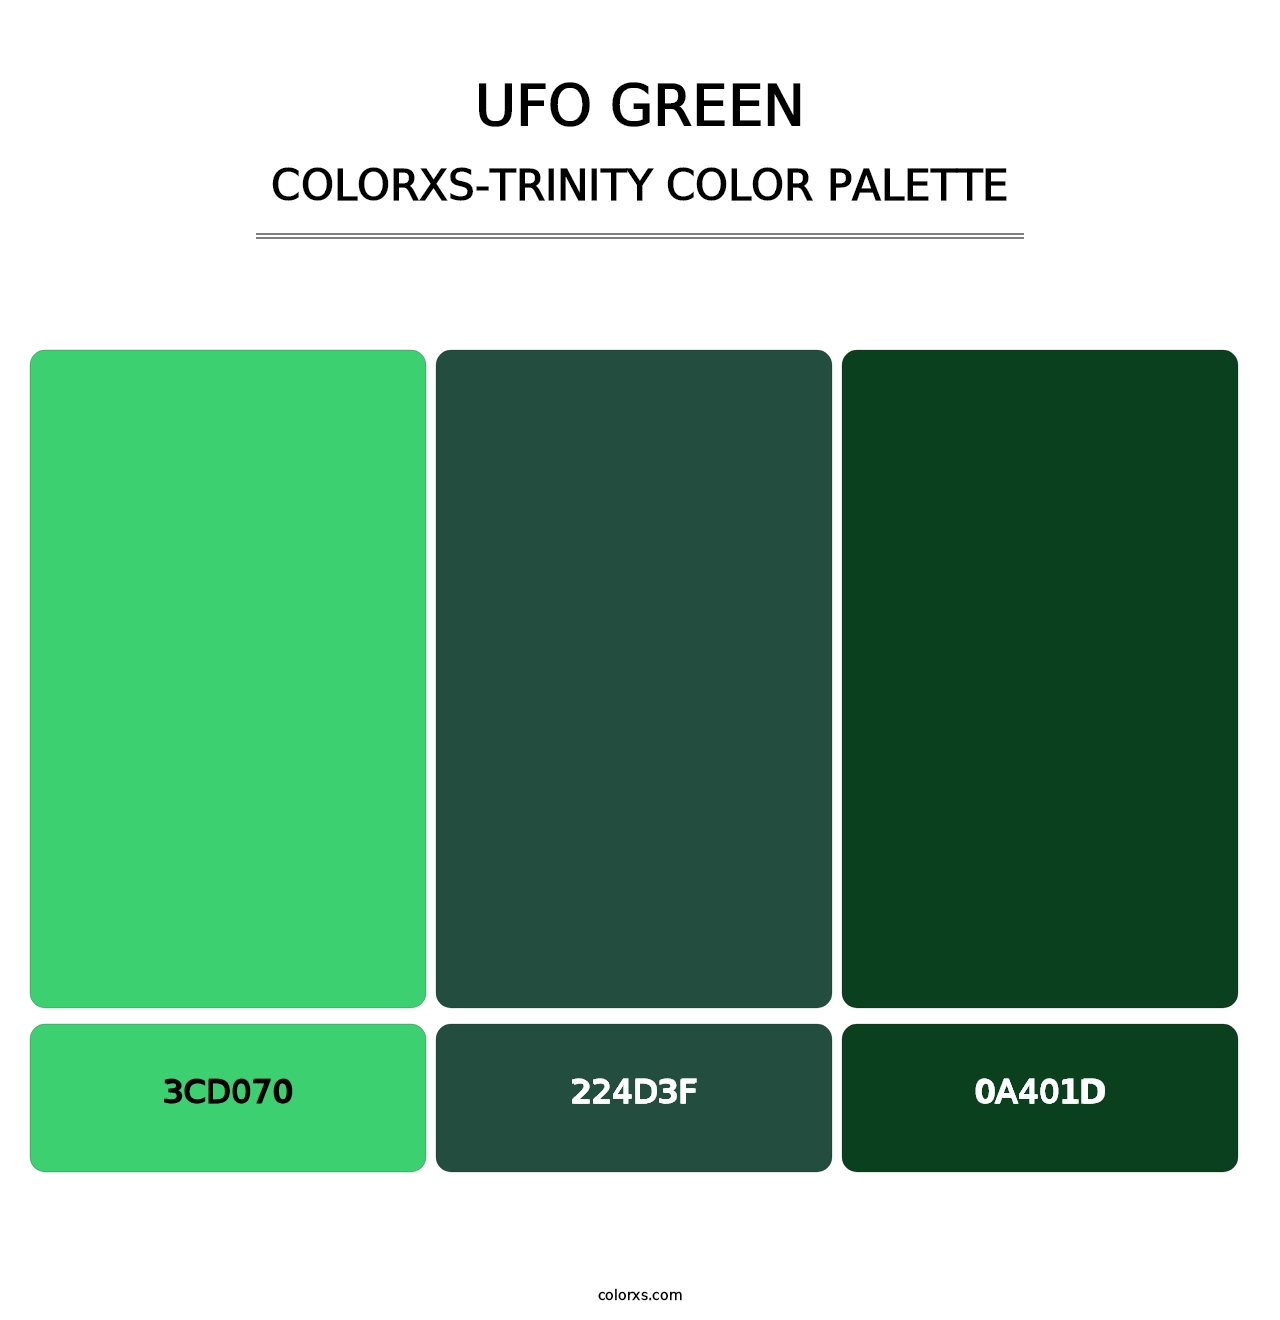 UFO Green - Colorxs Trinity Palette